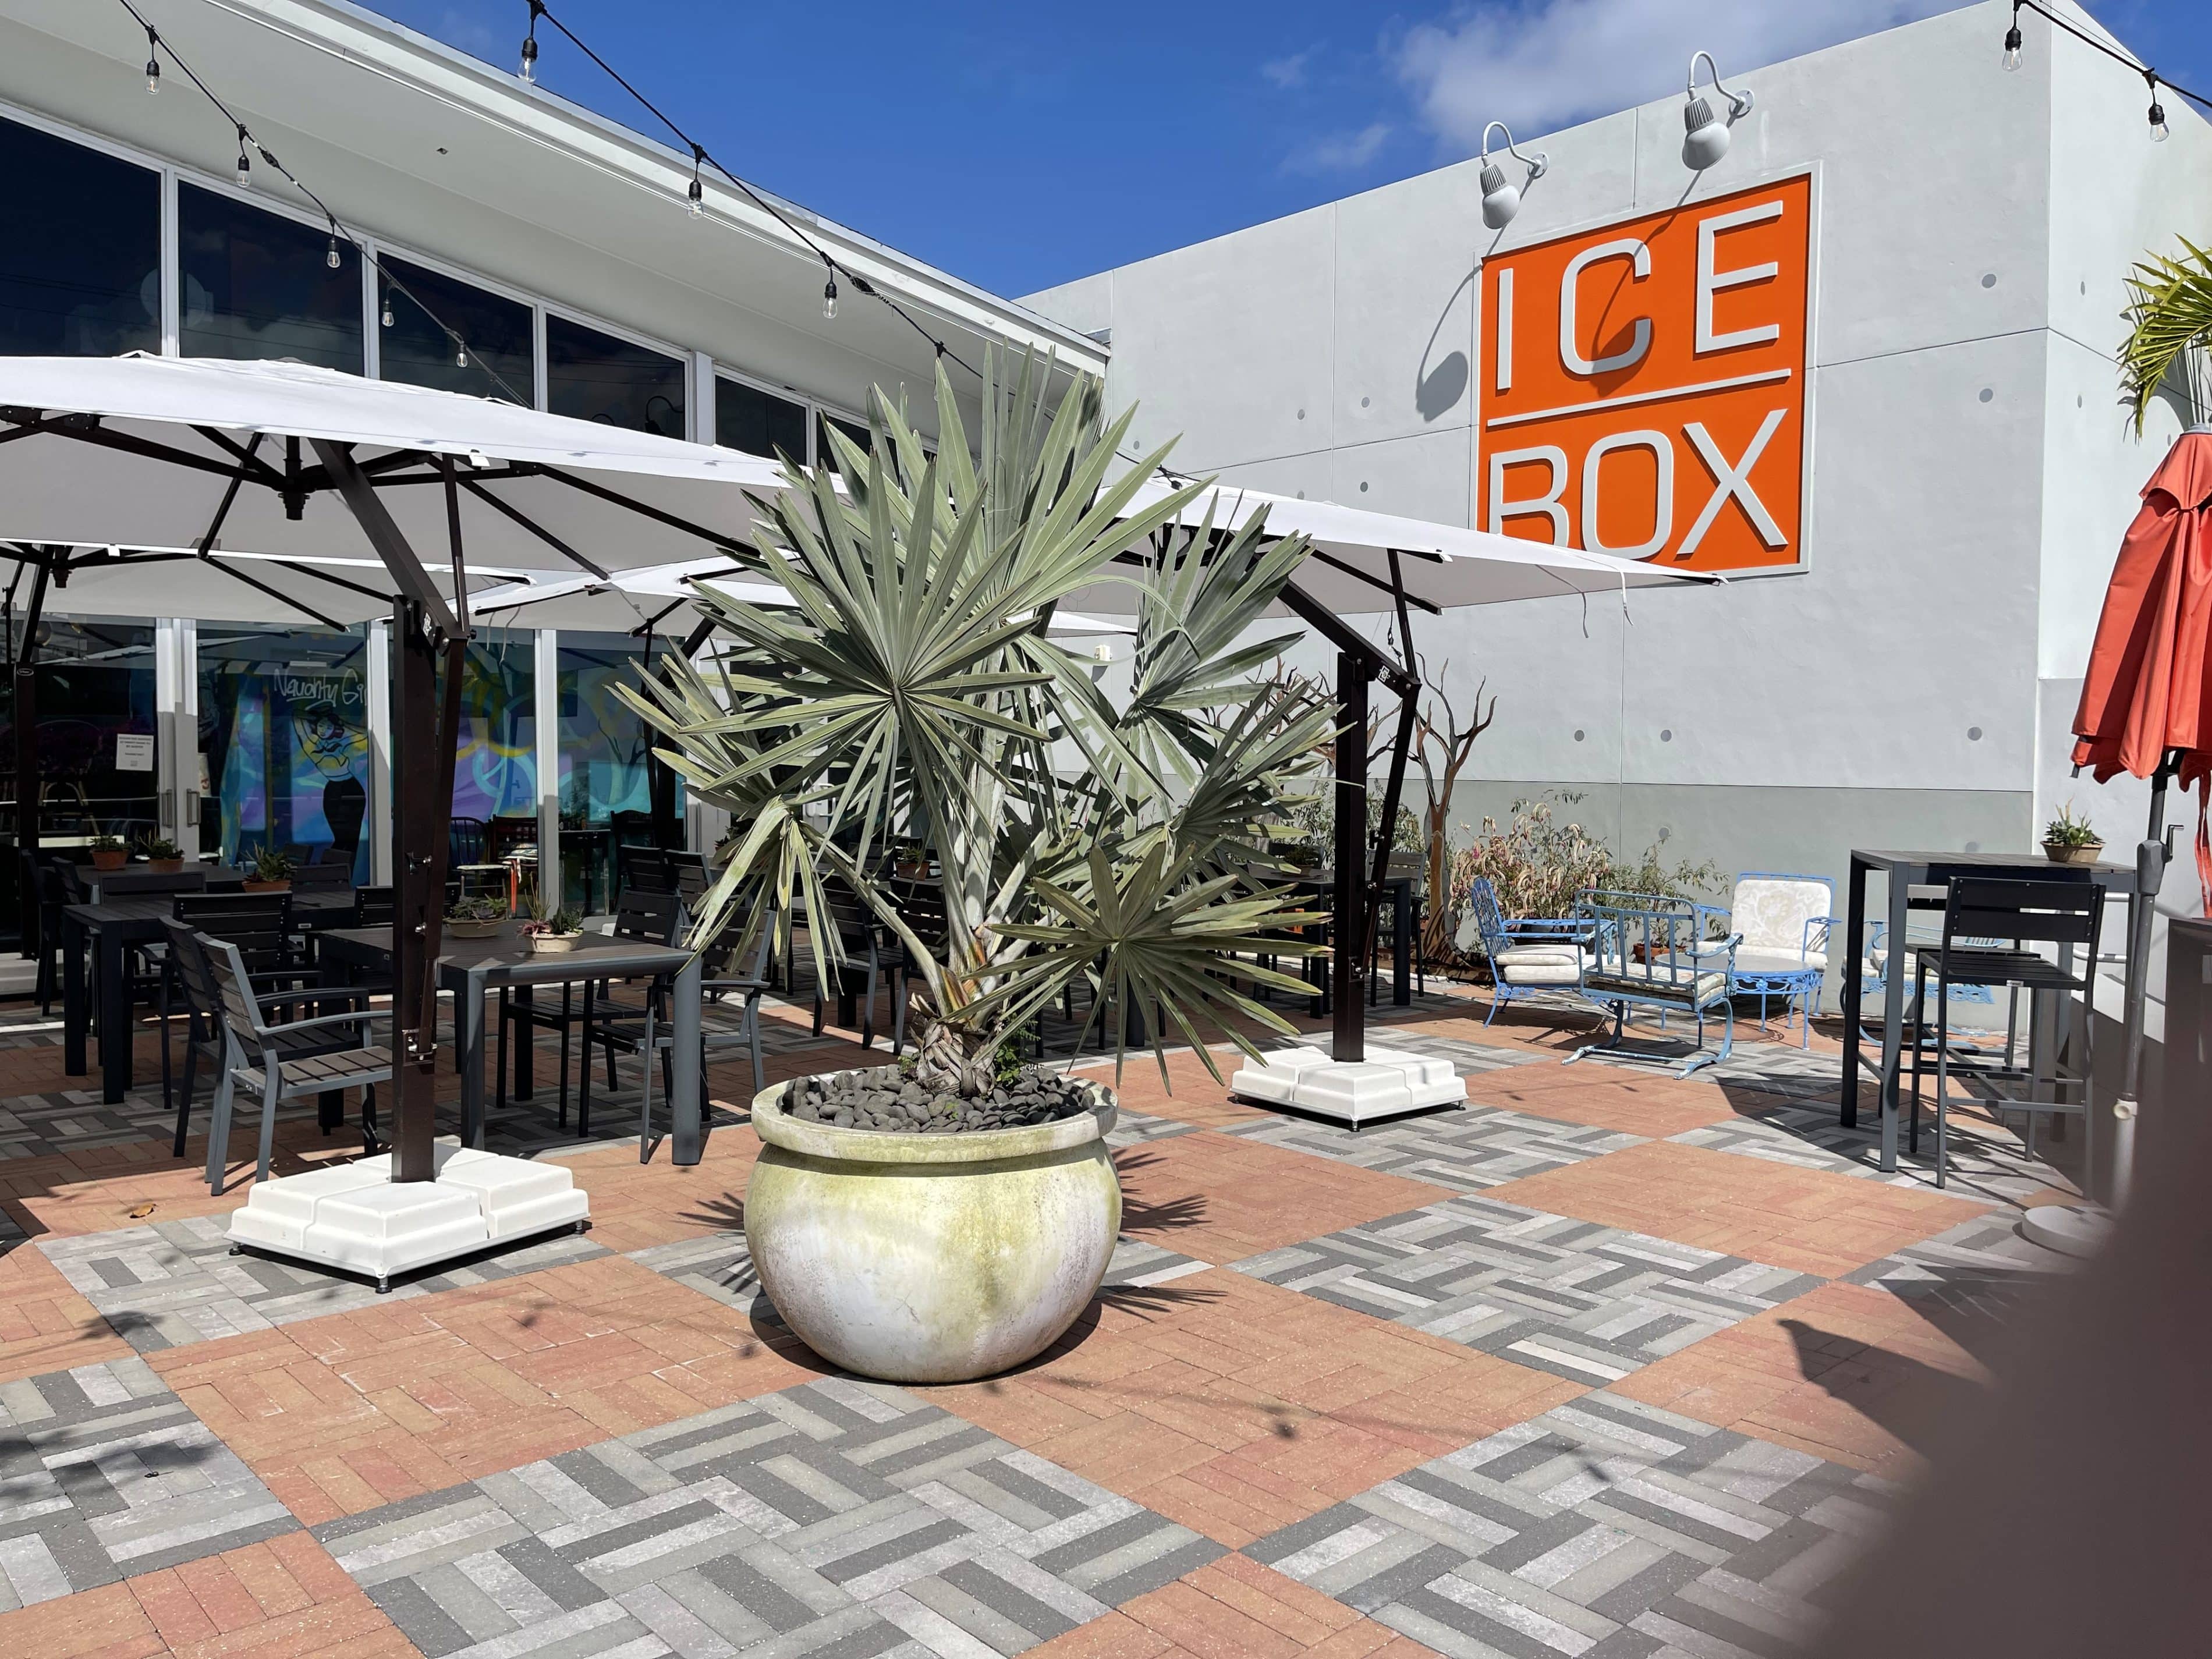 IceBox Cafe